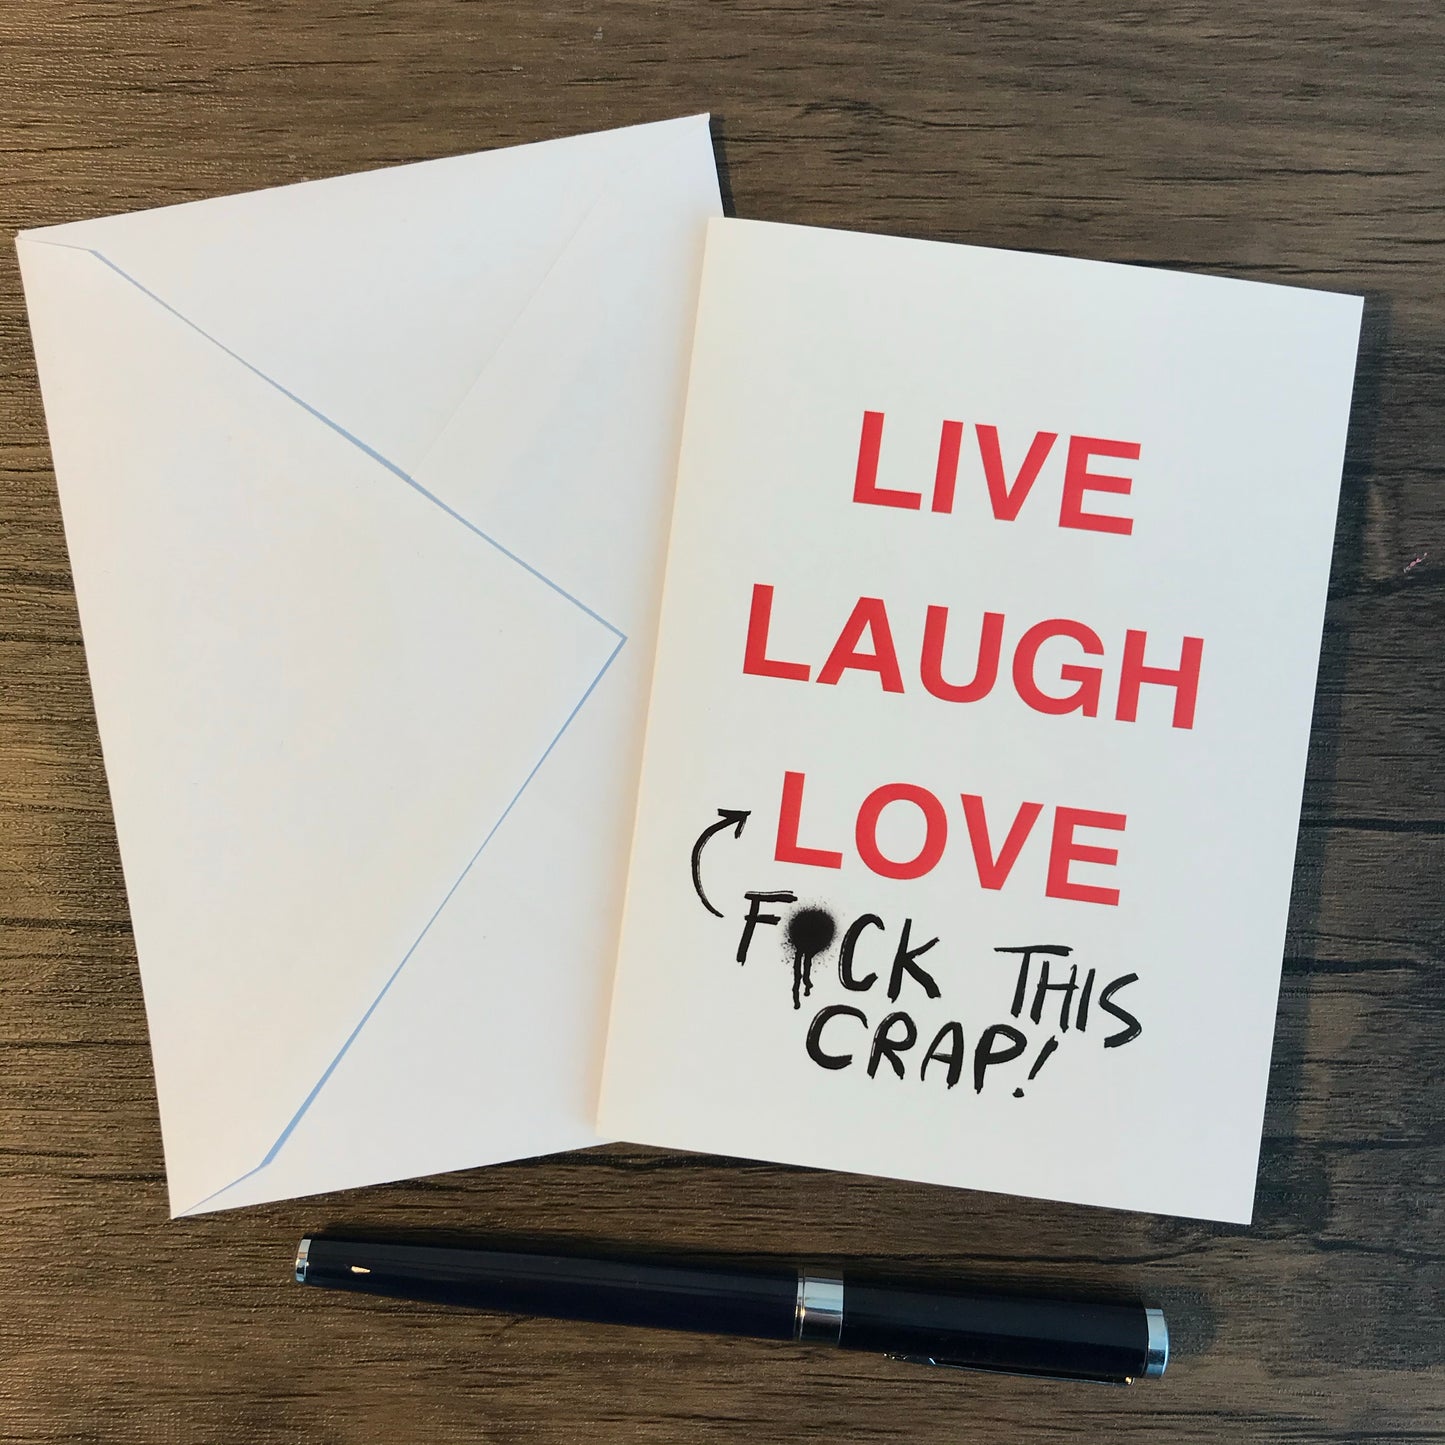 LIVE LAUGH LOVE F*CK THIS CRAP! - GREETING CARD